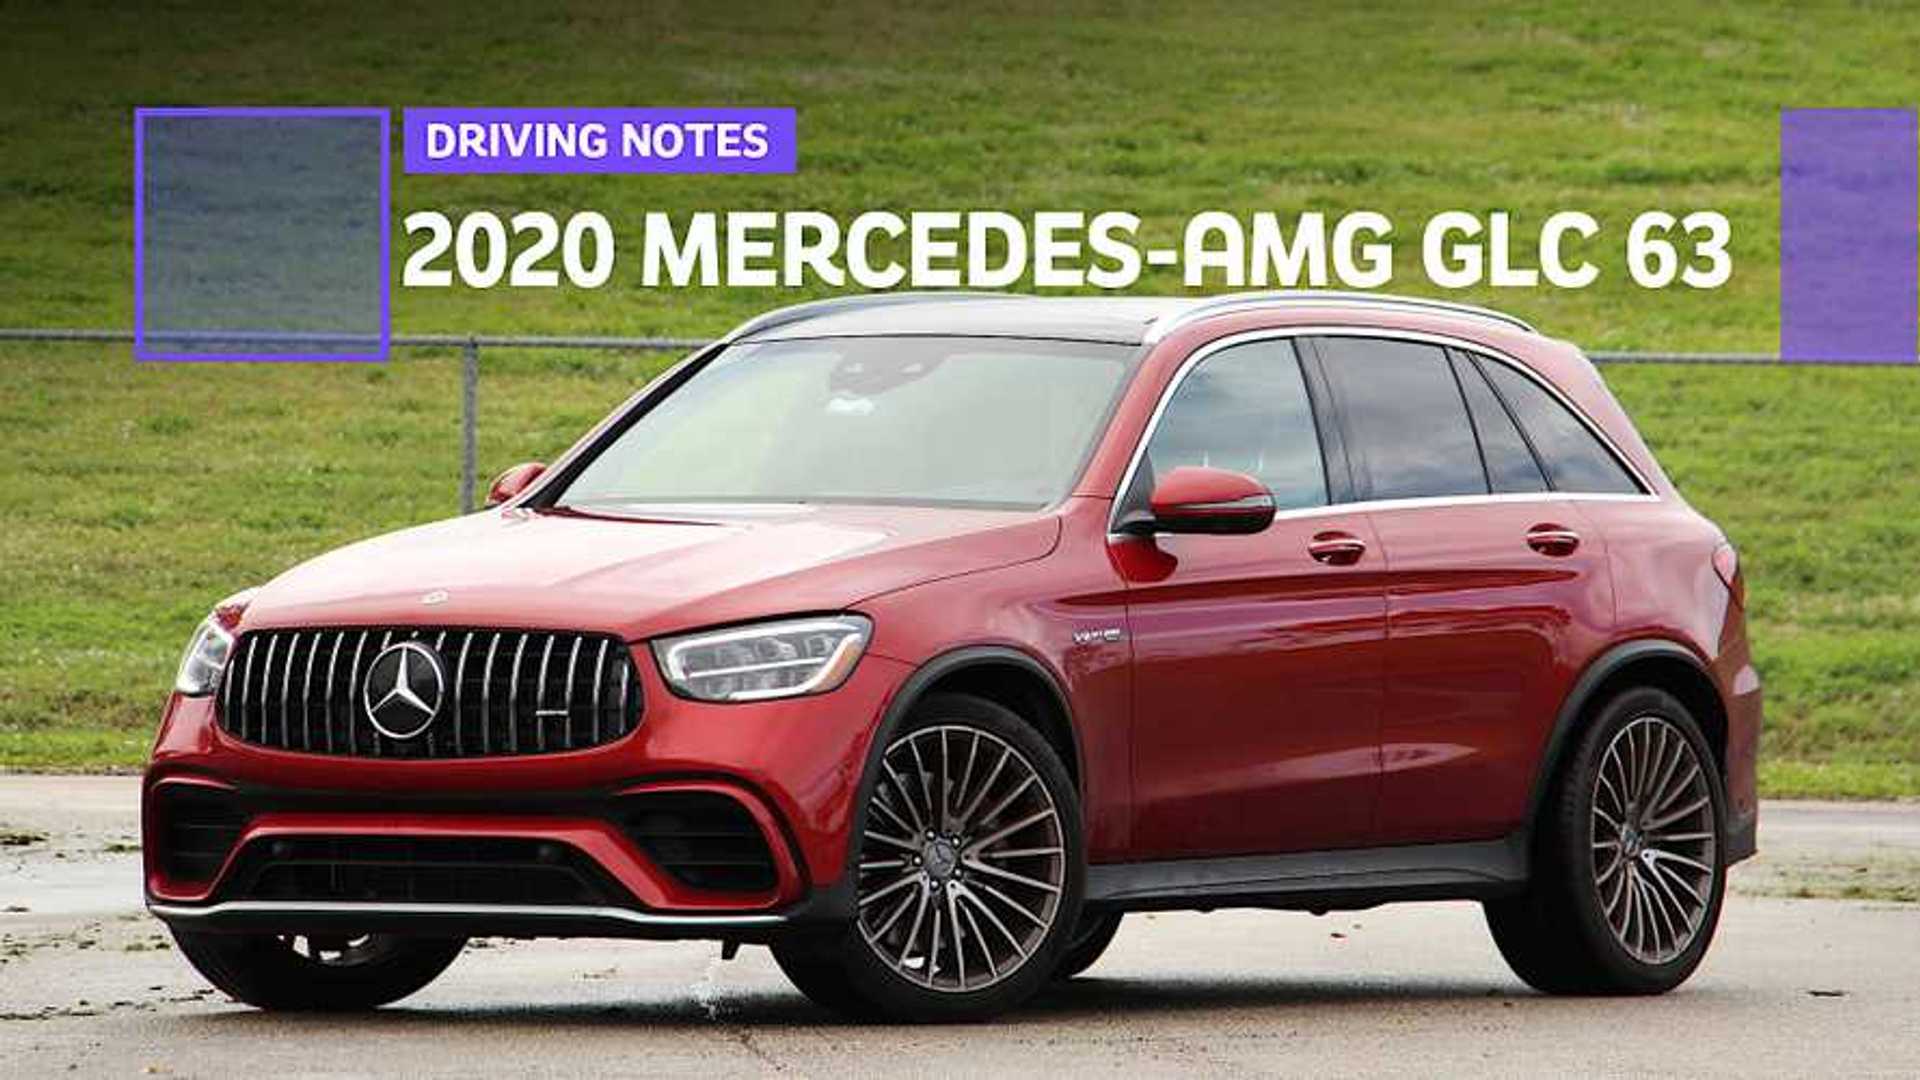 2020 Mercedes-AMG GLC 63 Driving Notes: Insane-UV